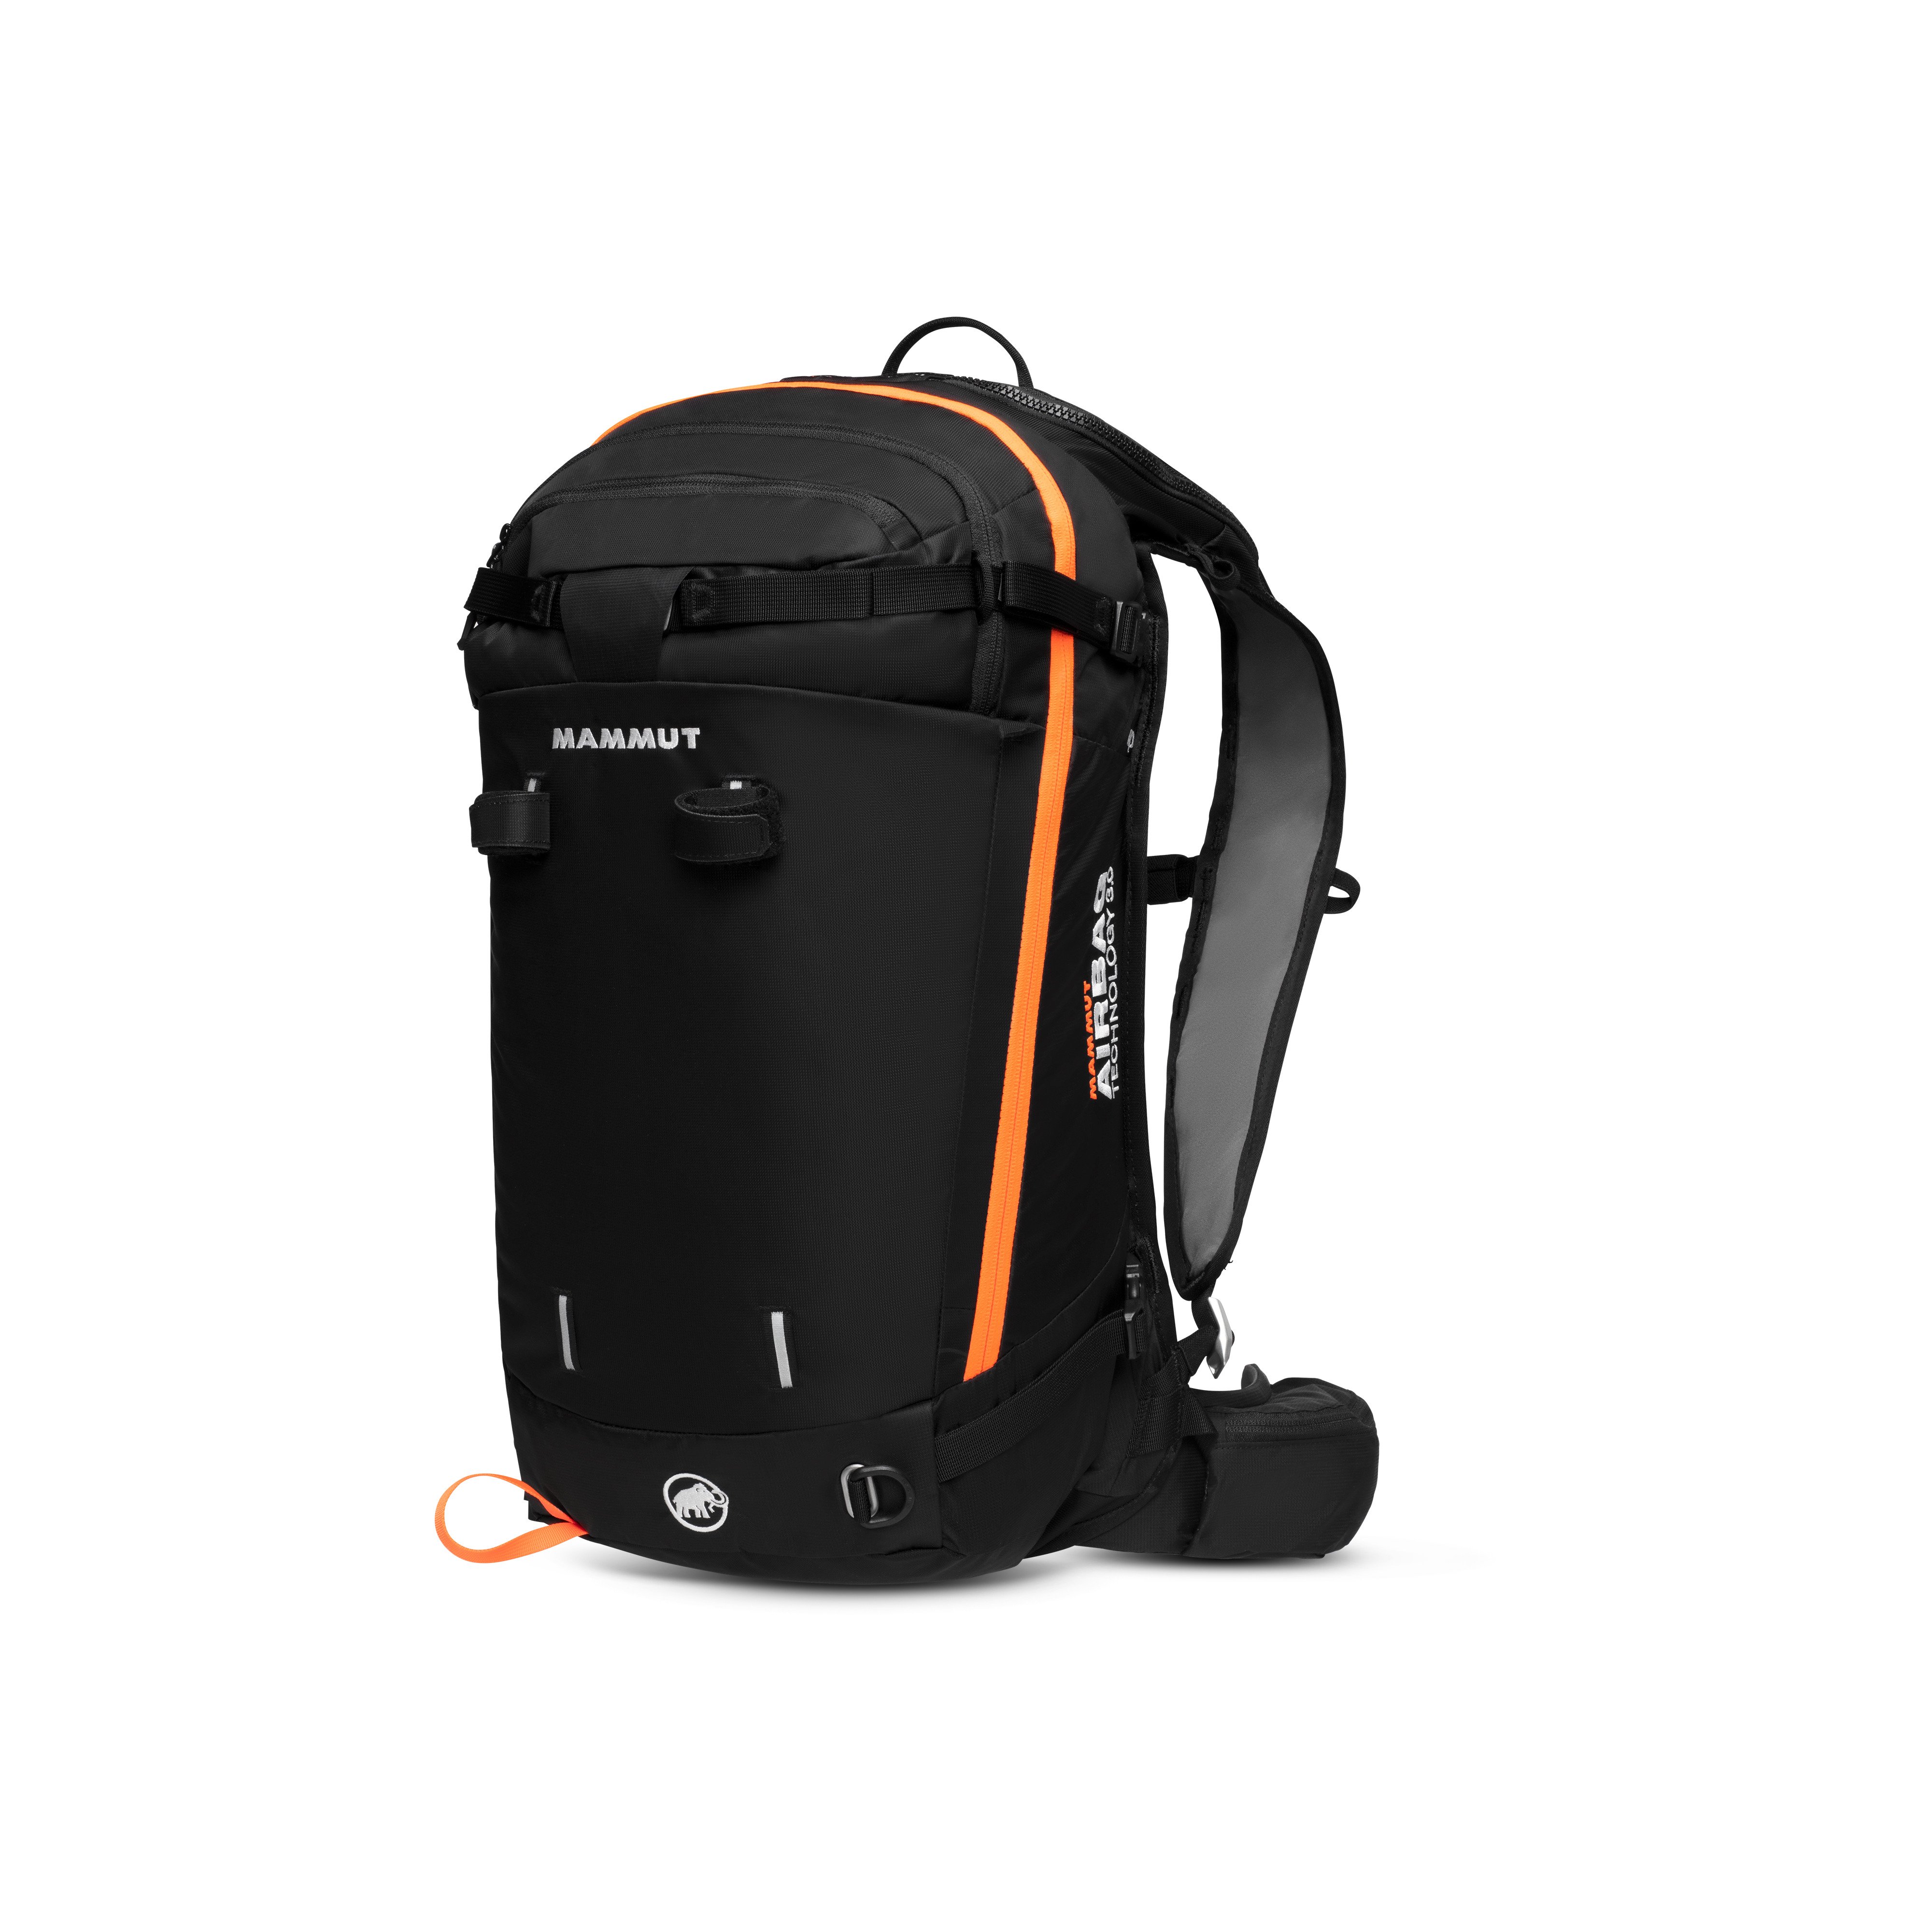 Light Protection Airbag 3.0 - black-vibrant orange, 30 L product image